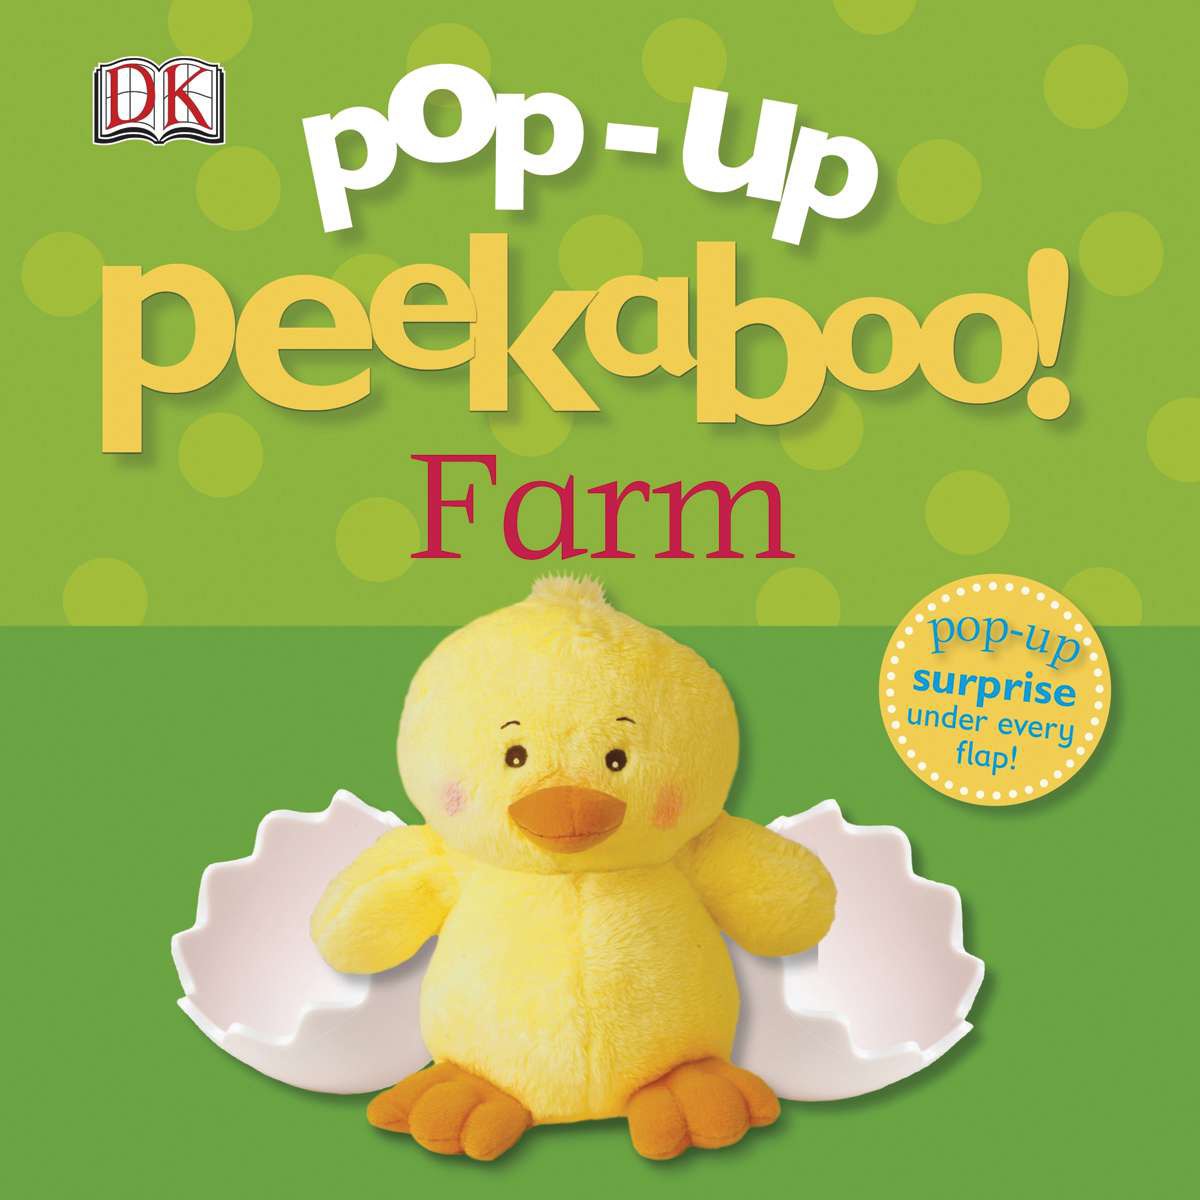 Pop-Up Peekaboo! Farm